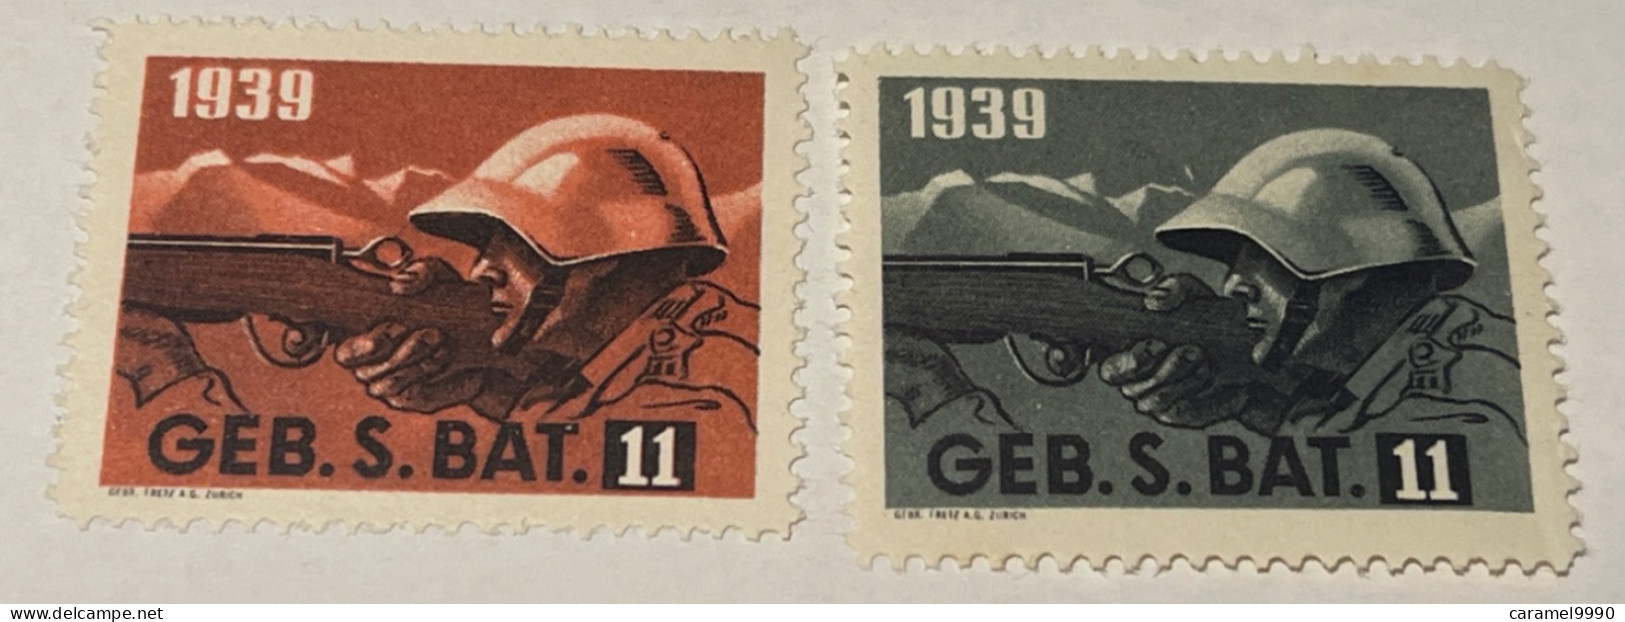 Schweiz Swiss Soldatenmarken 1939 GEB. S. 5. Bat 11 Z 24 - Vignettes